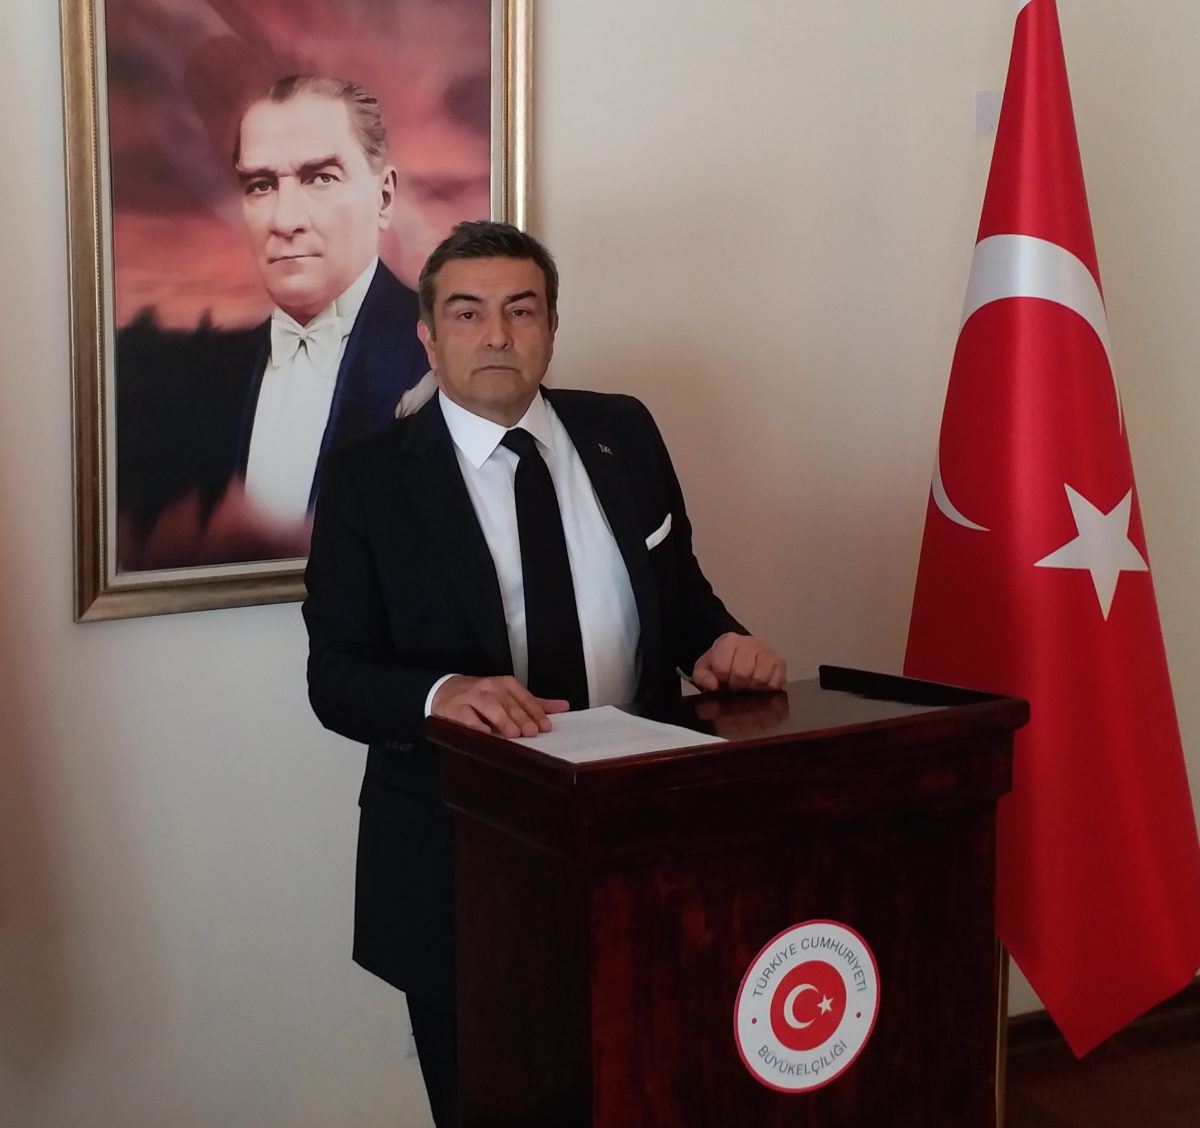 Turkey pledges to promote democracy and fight terrorism